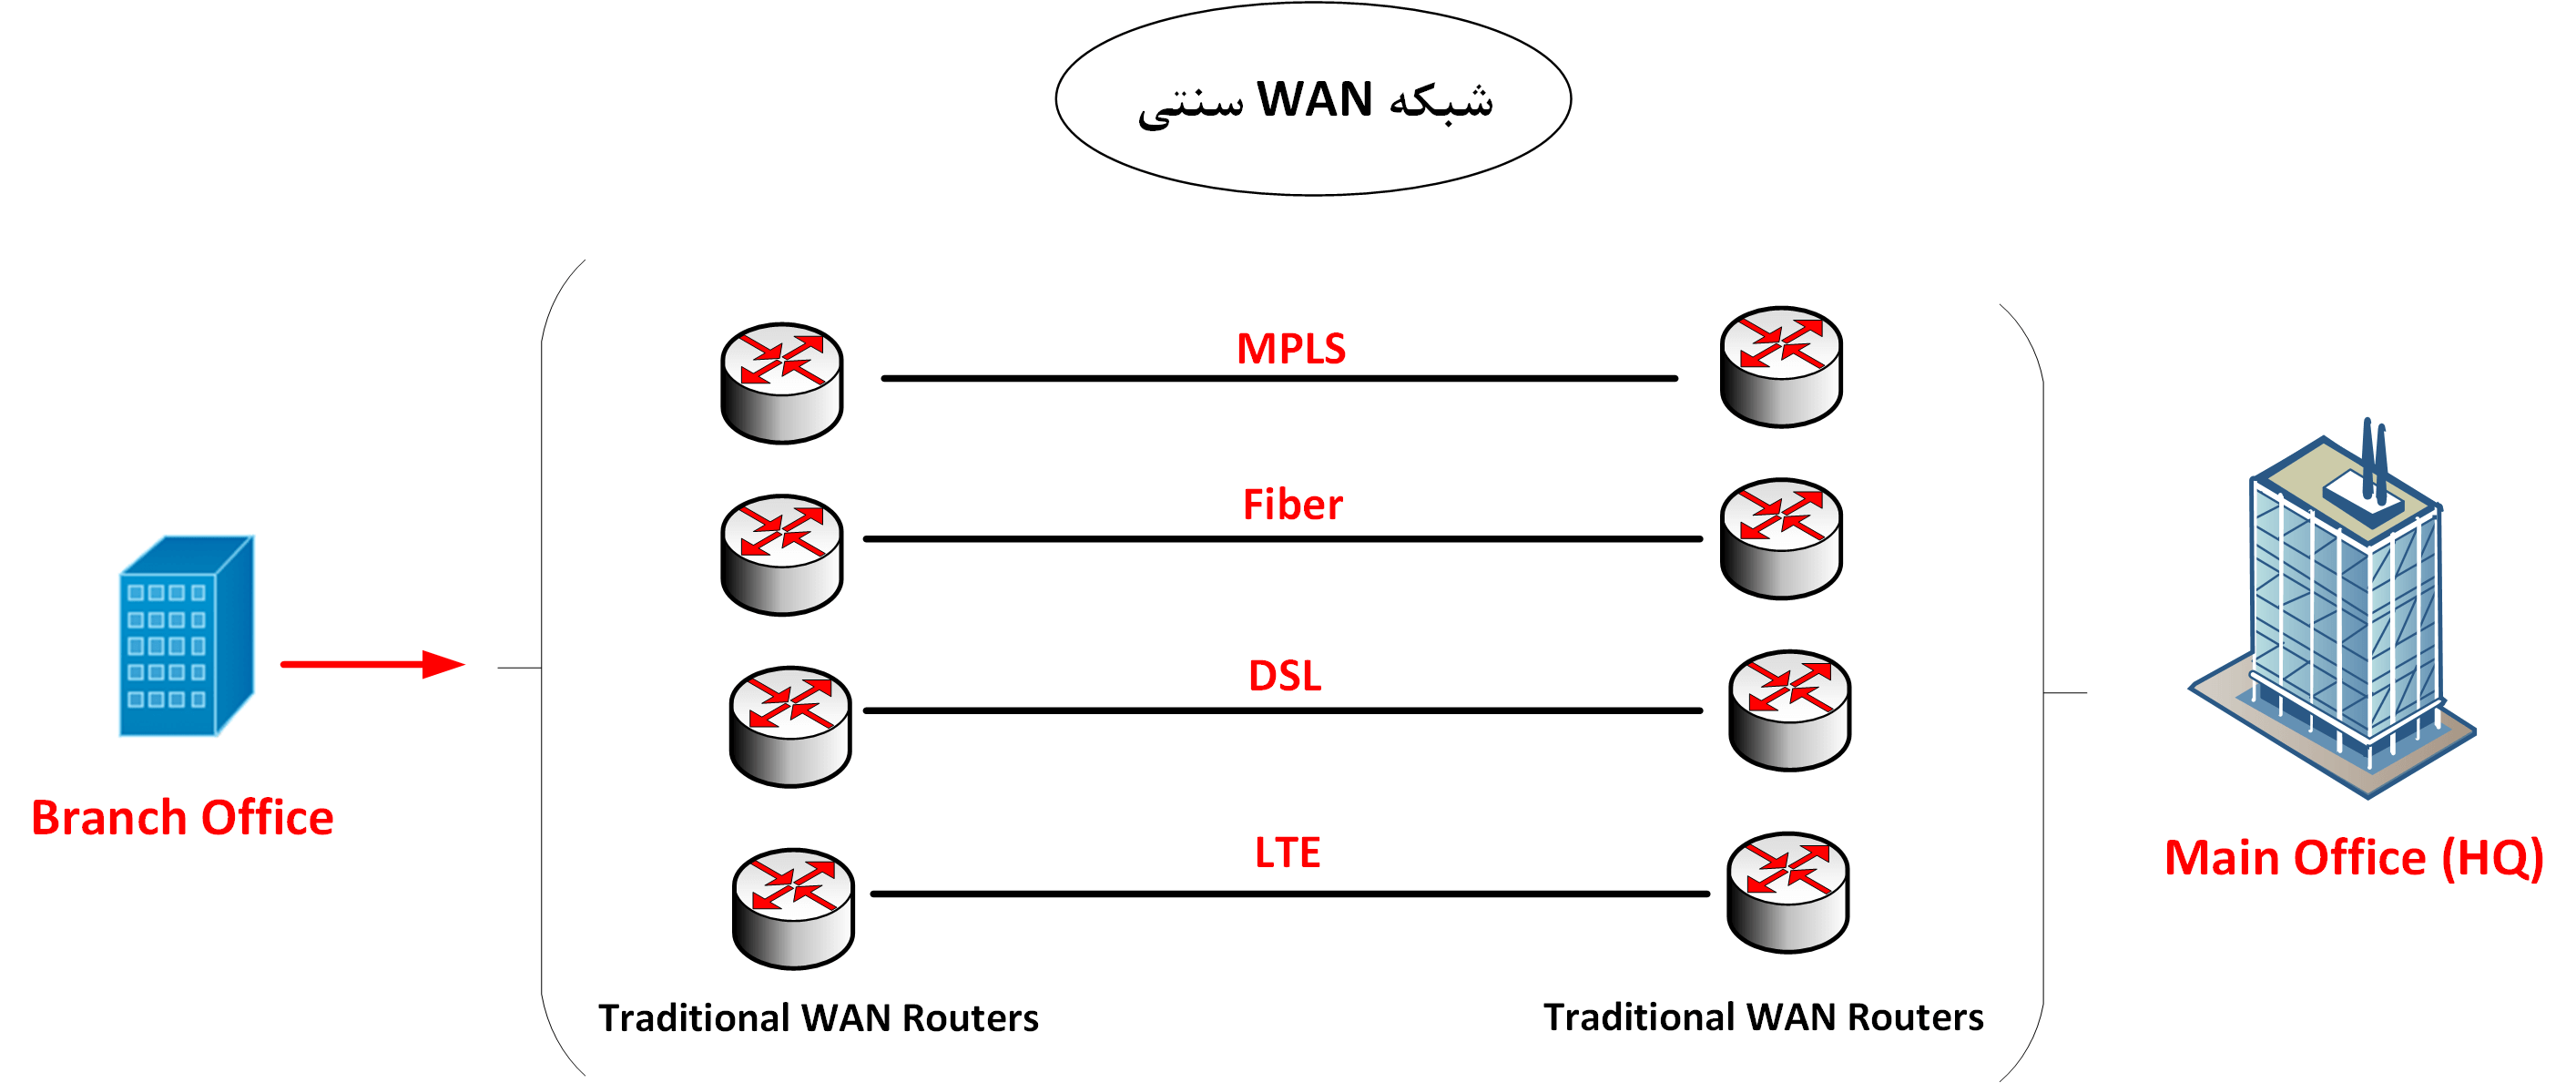 تفاوت SD-WAN با WAN سنتی